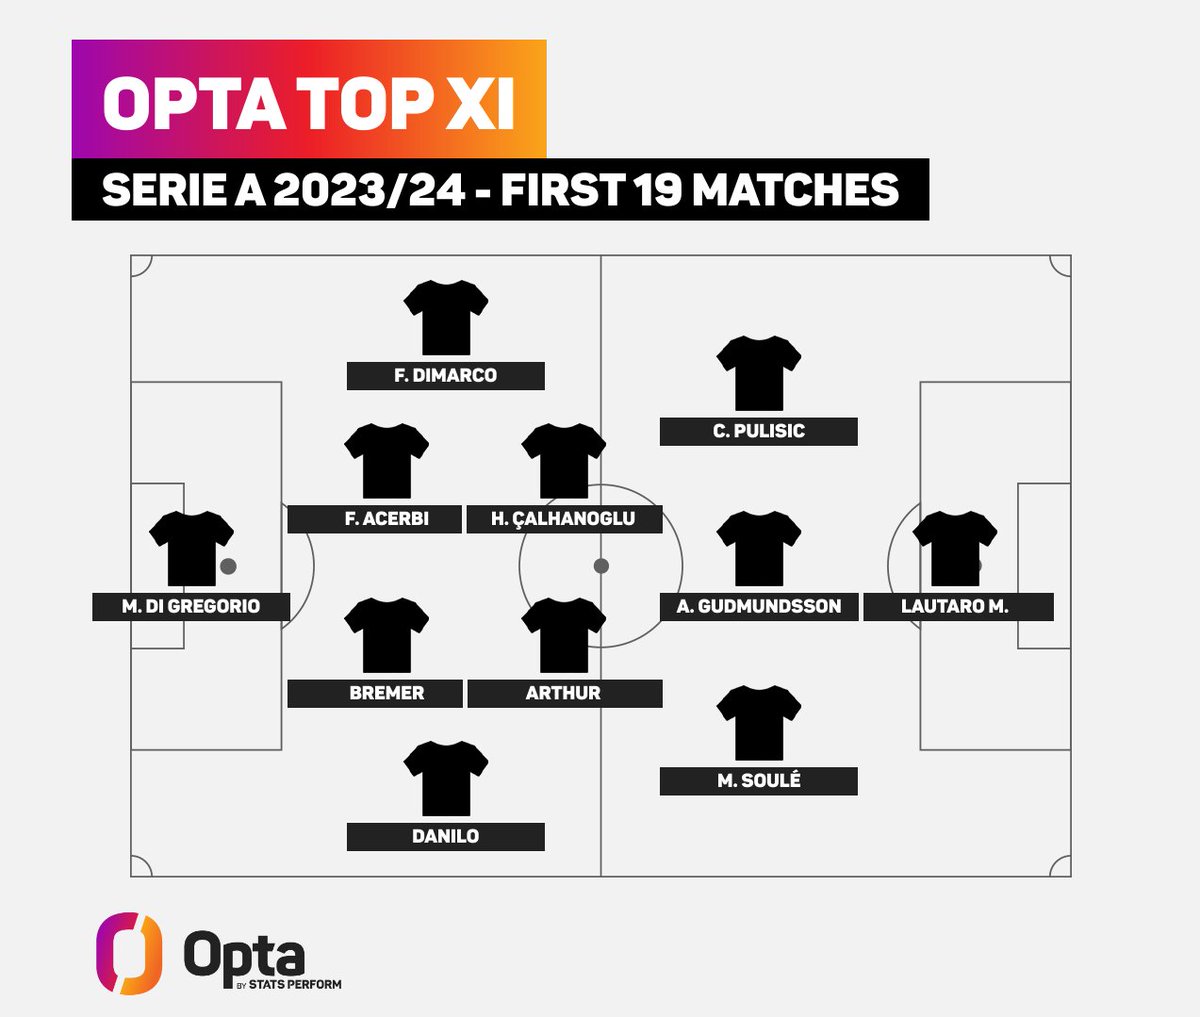 AC Milan - Pulisic is in Serie A best XI so far by OPTA